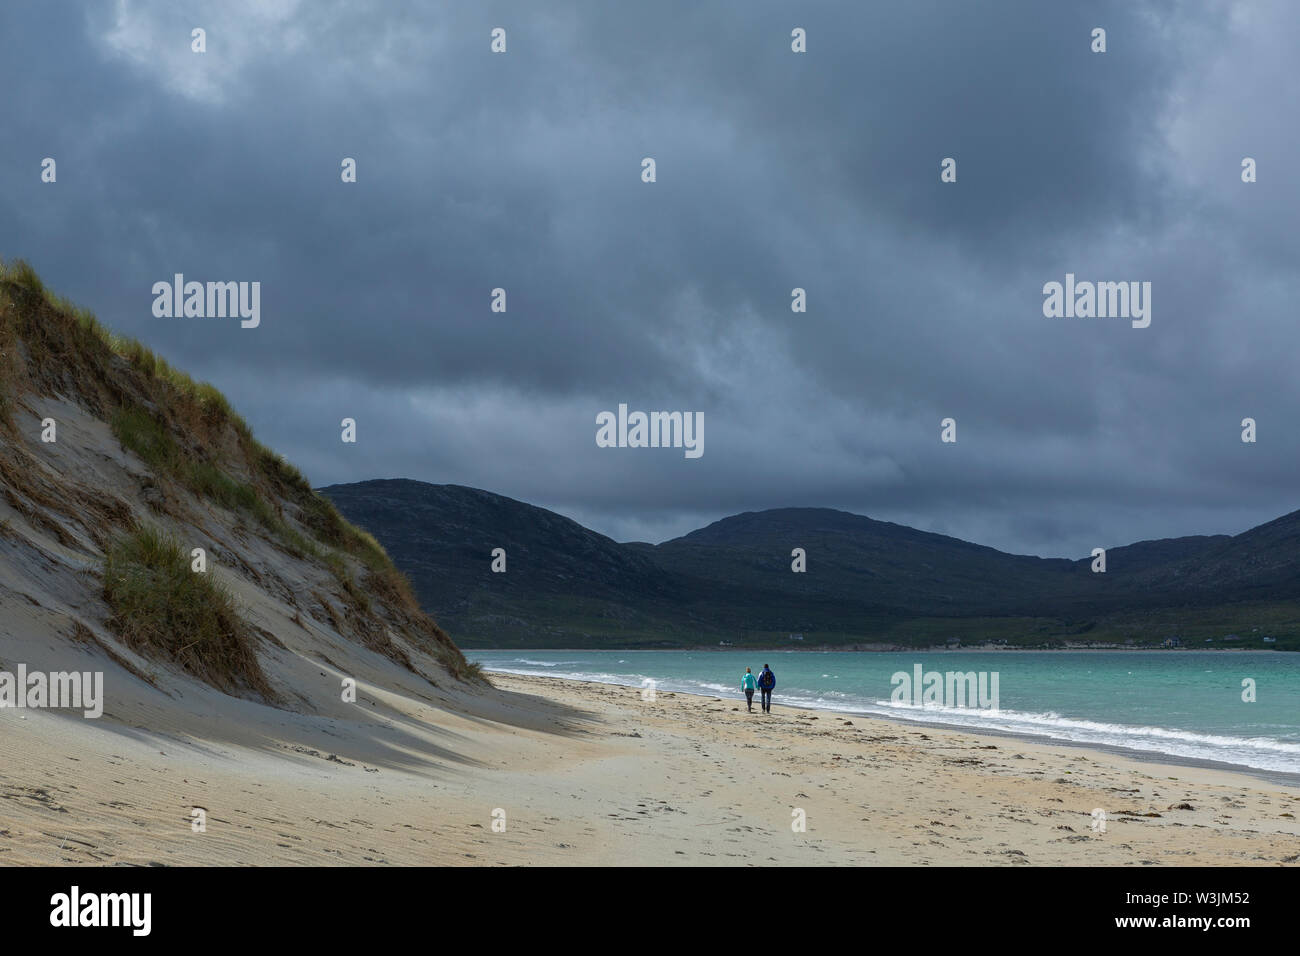 Man and woman walking on the beach at Luskentyre, Isle of Harris, Scotland Stock Photo